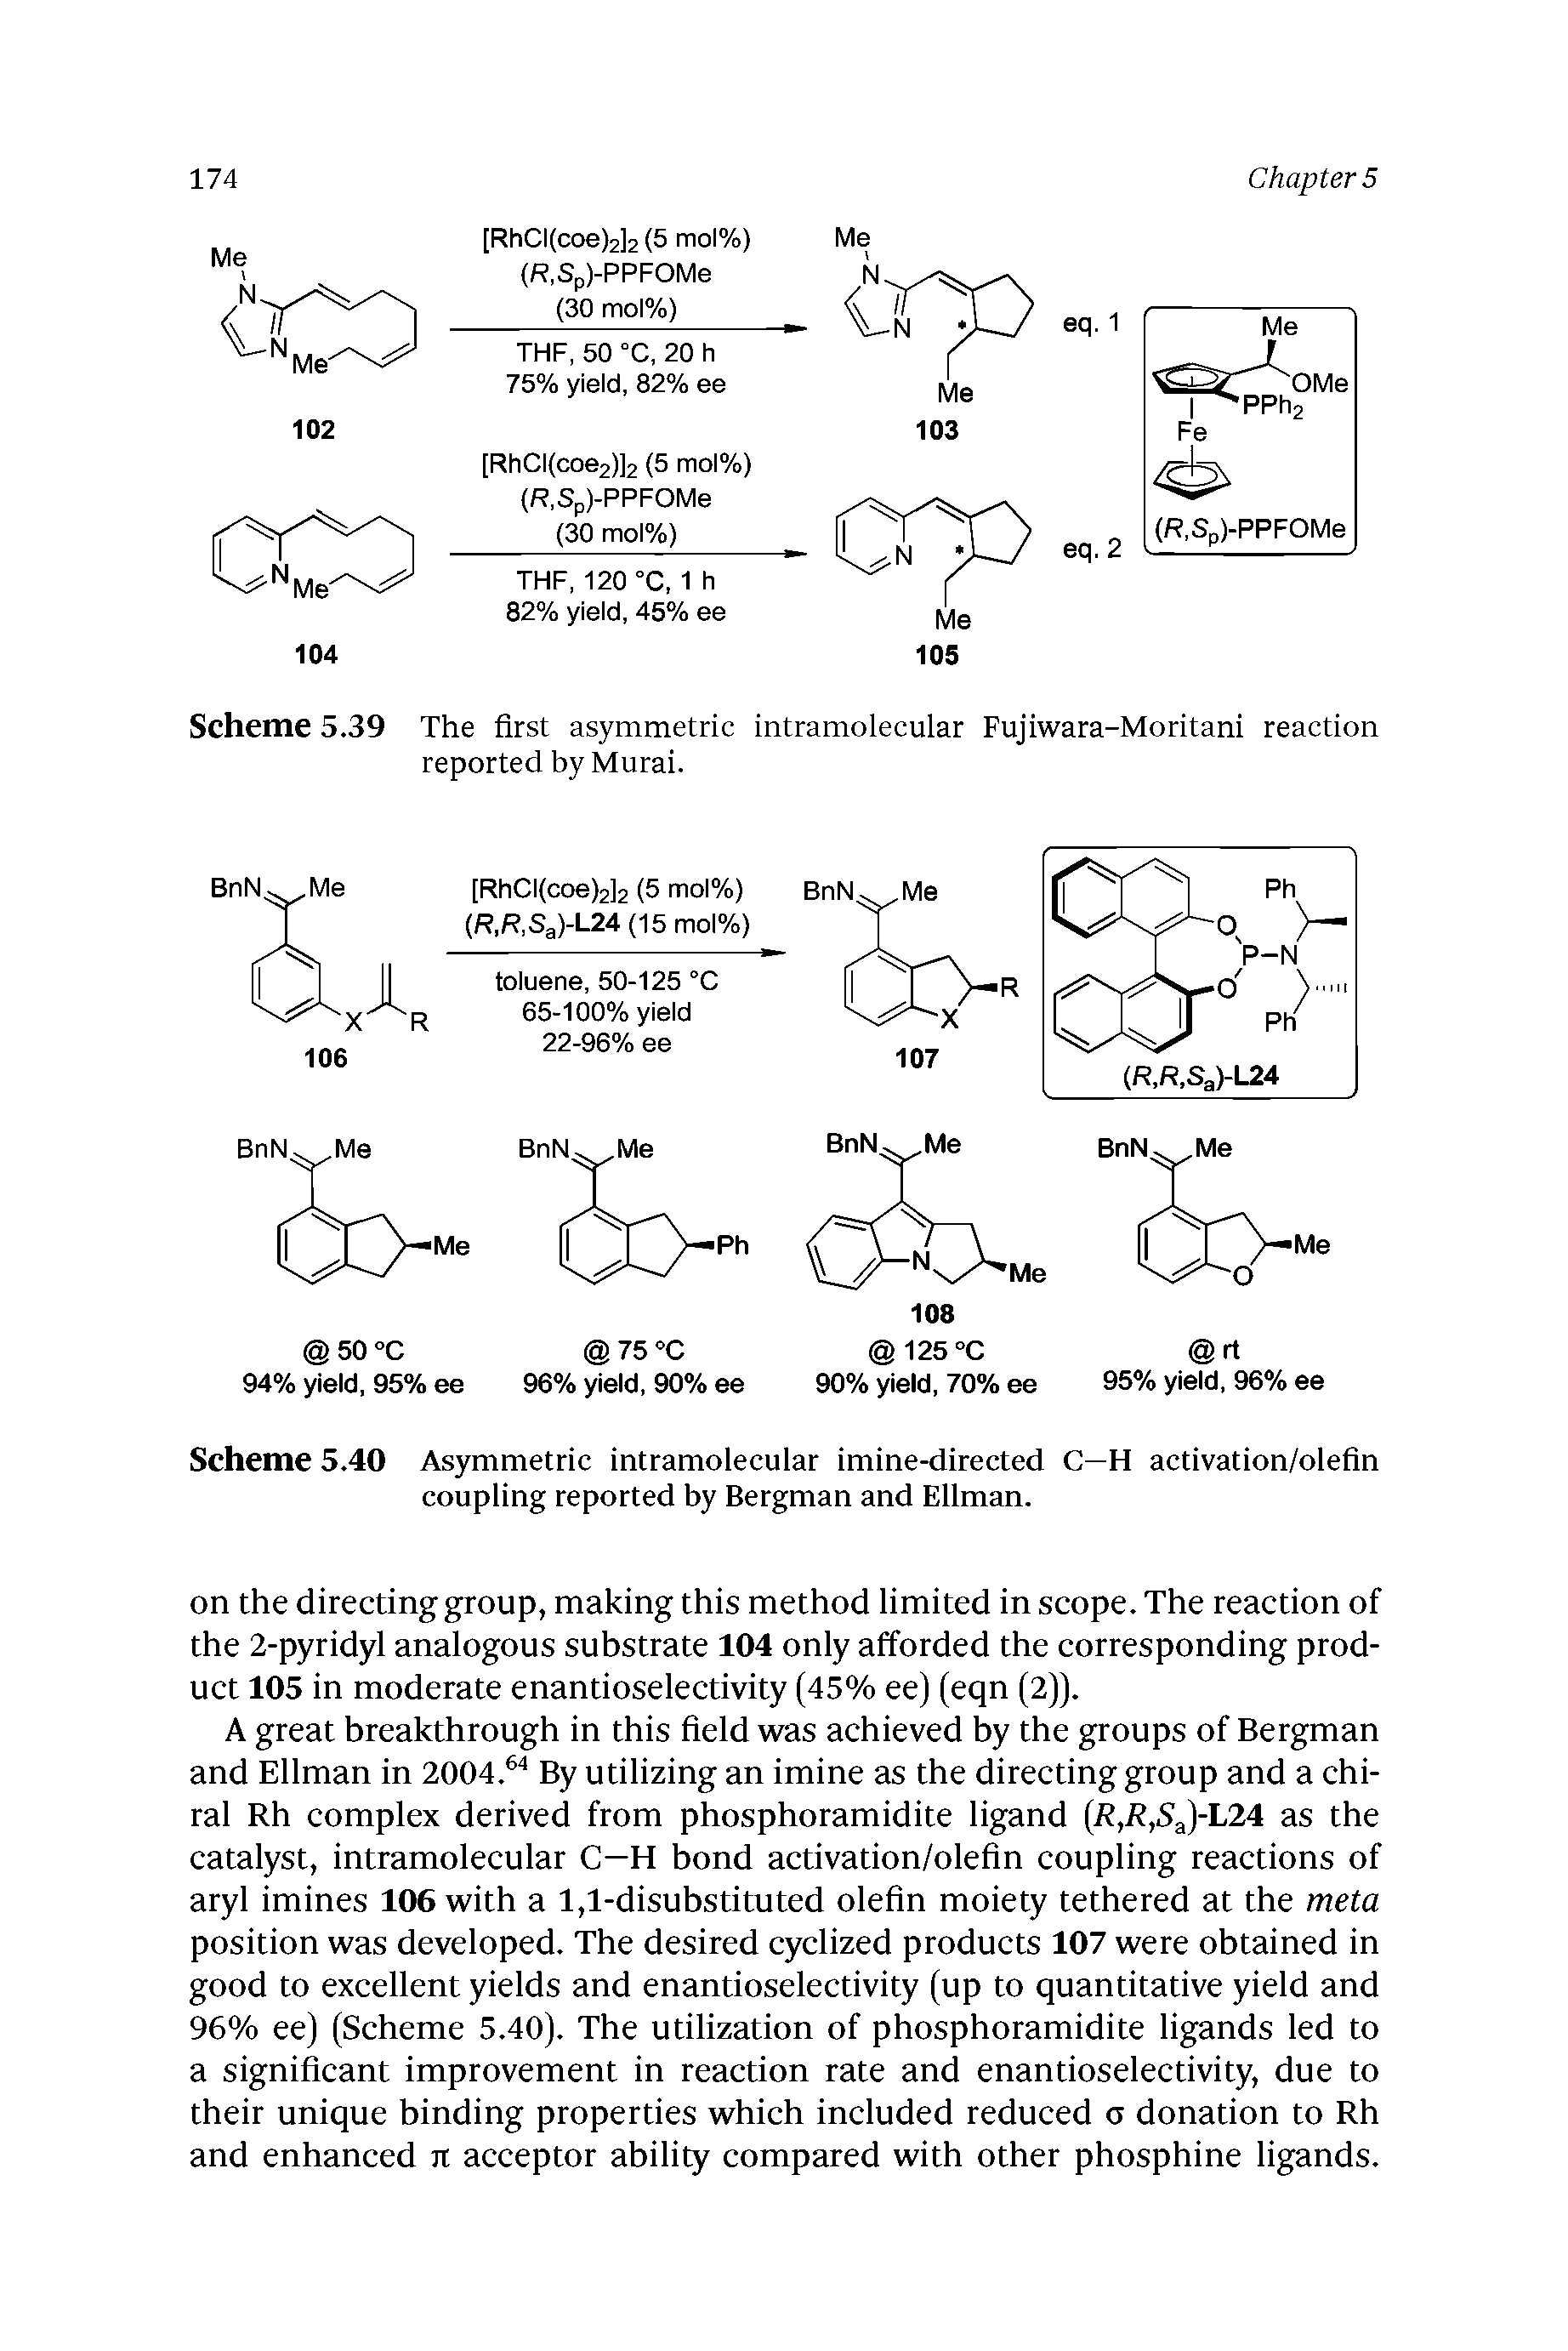 Scheme 5.39 The first asymmetric intramolecular Fujiwara-Moritani reaction reported by Mural.